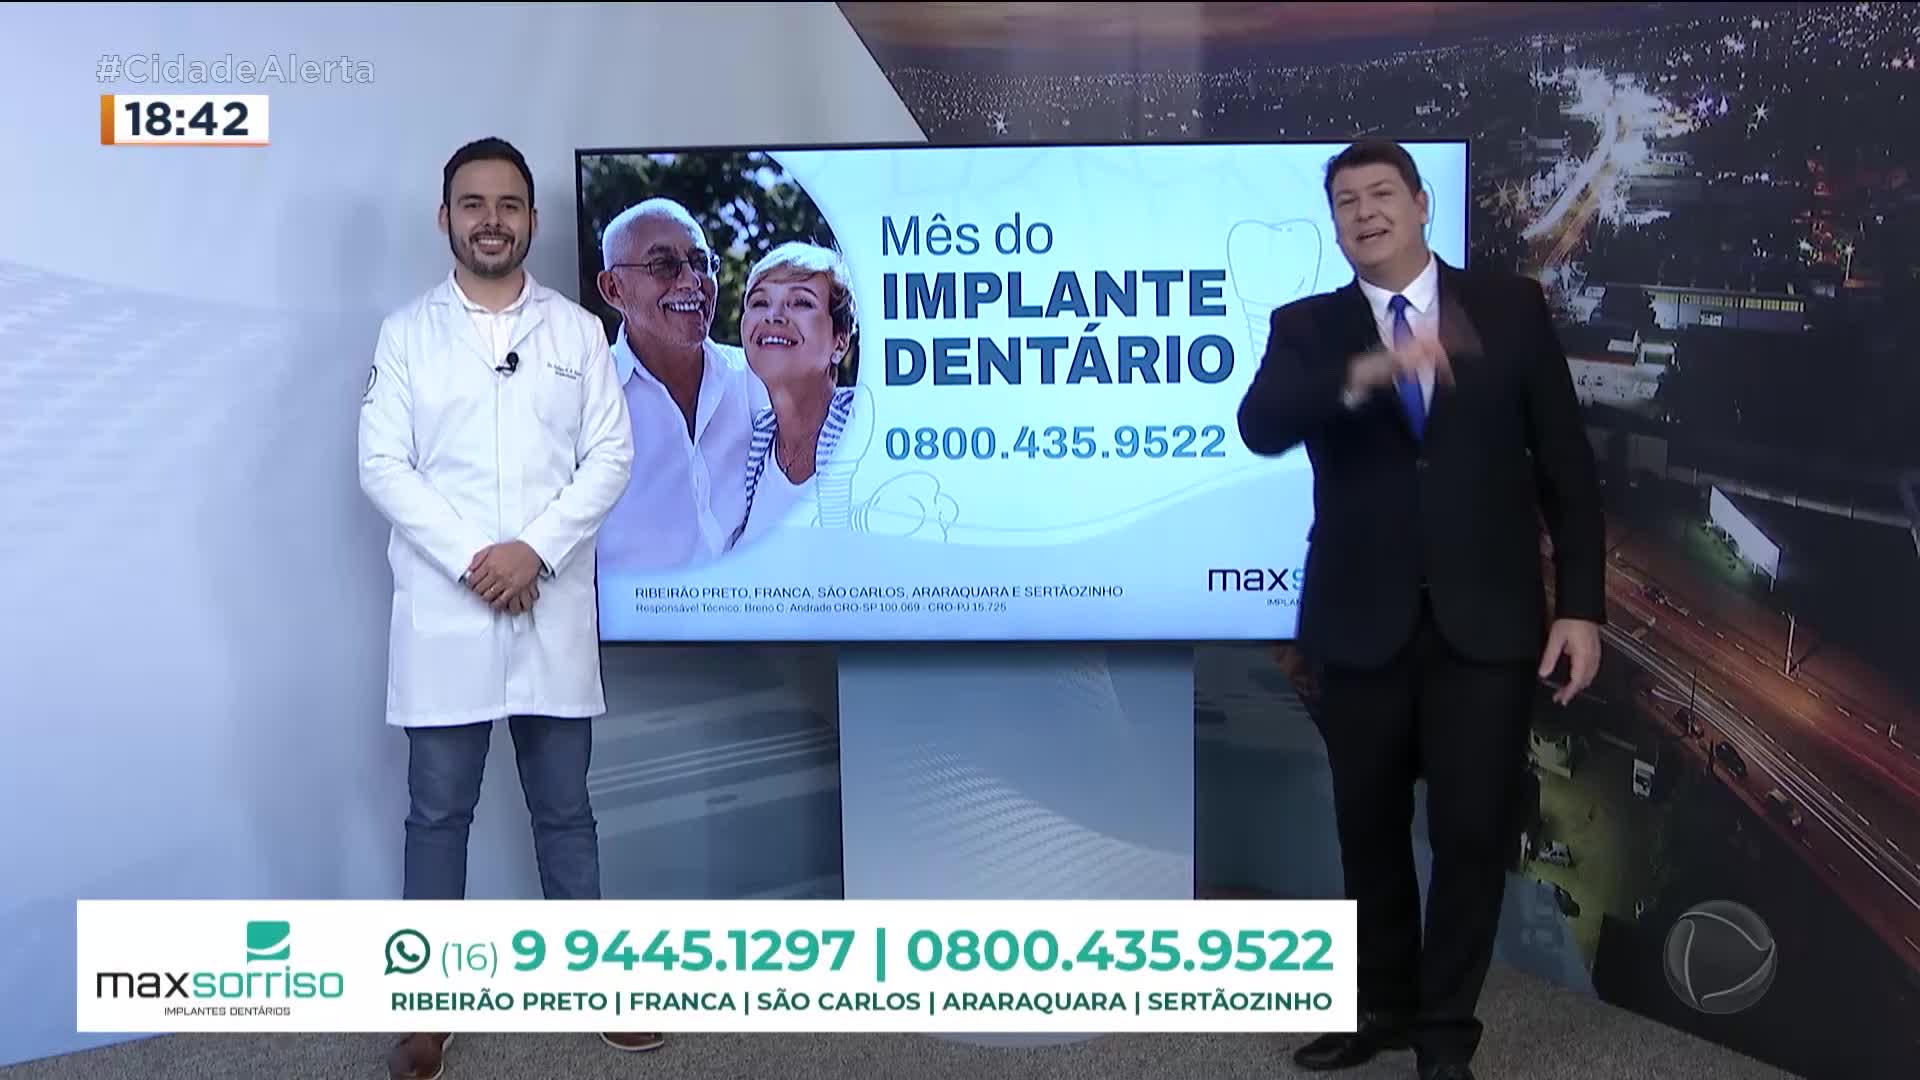 Vídeo: Max Sorriso - Cidade Alerta - Exibido em 02/05/2022